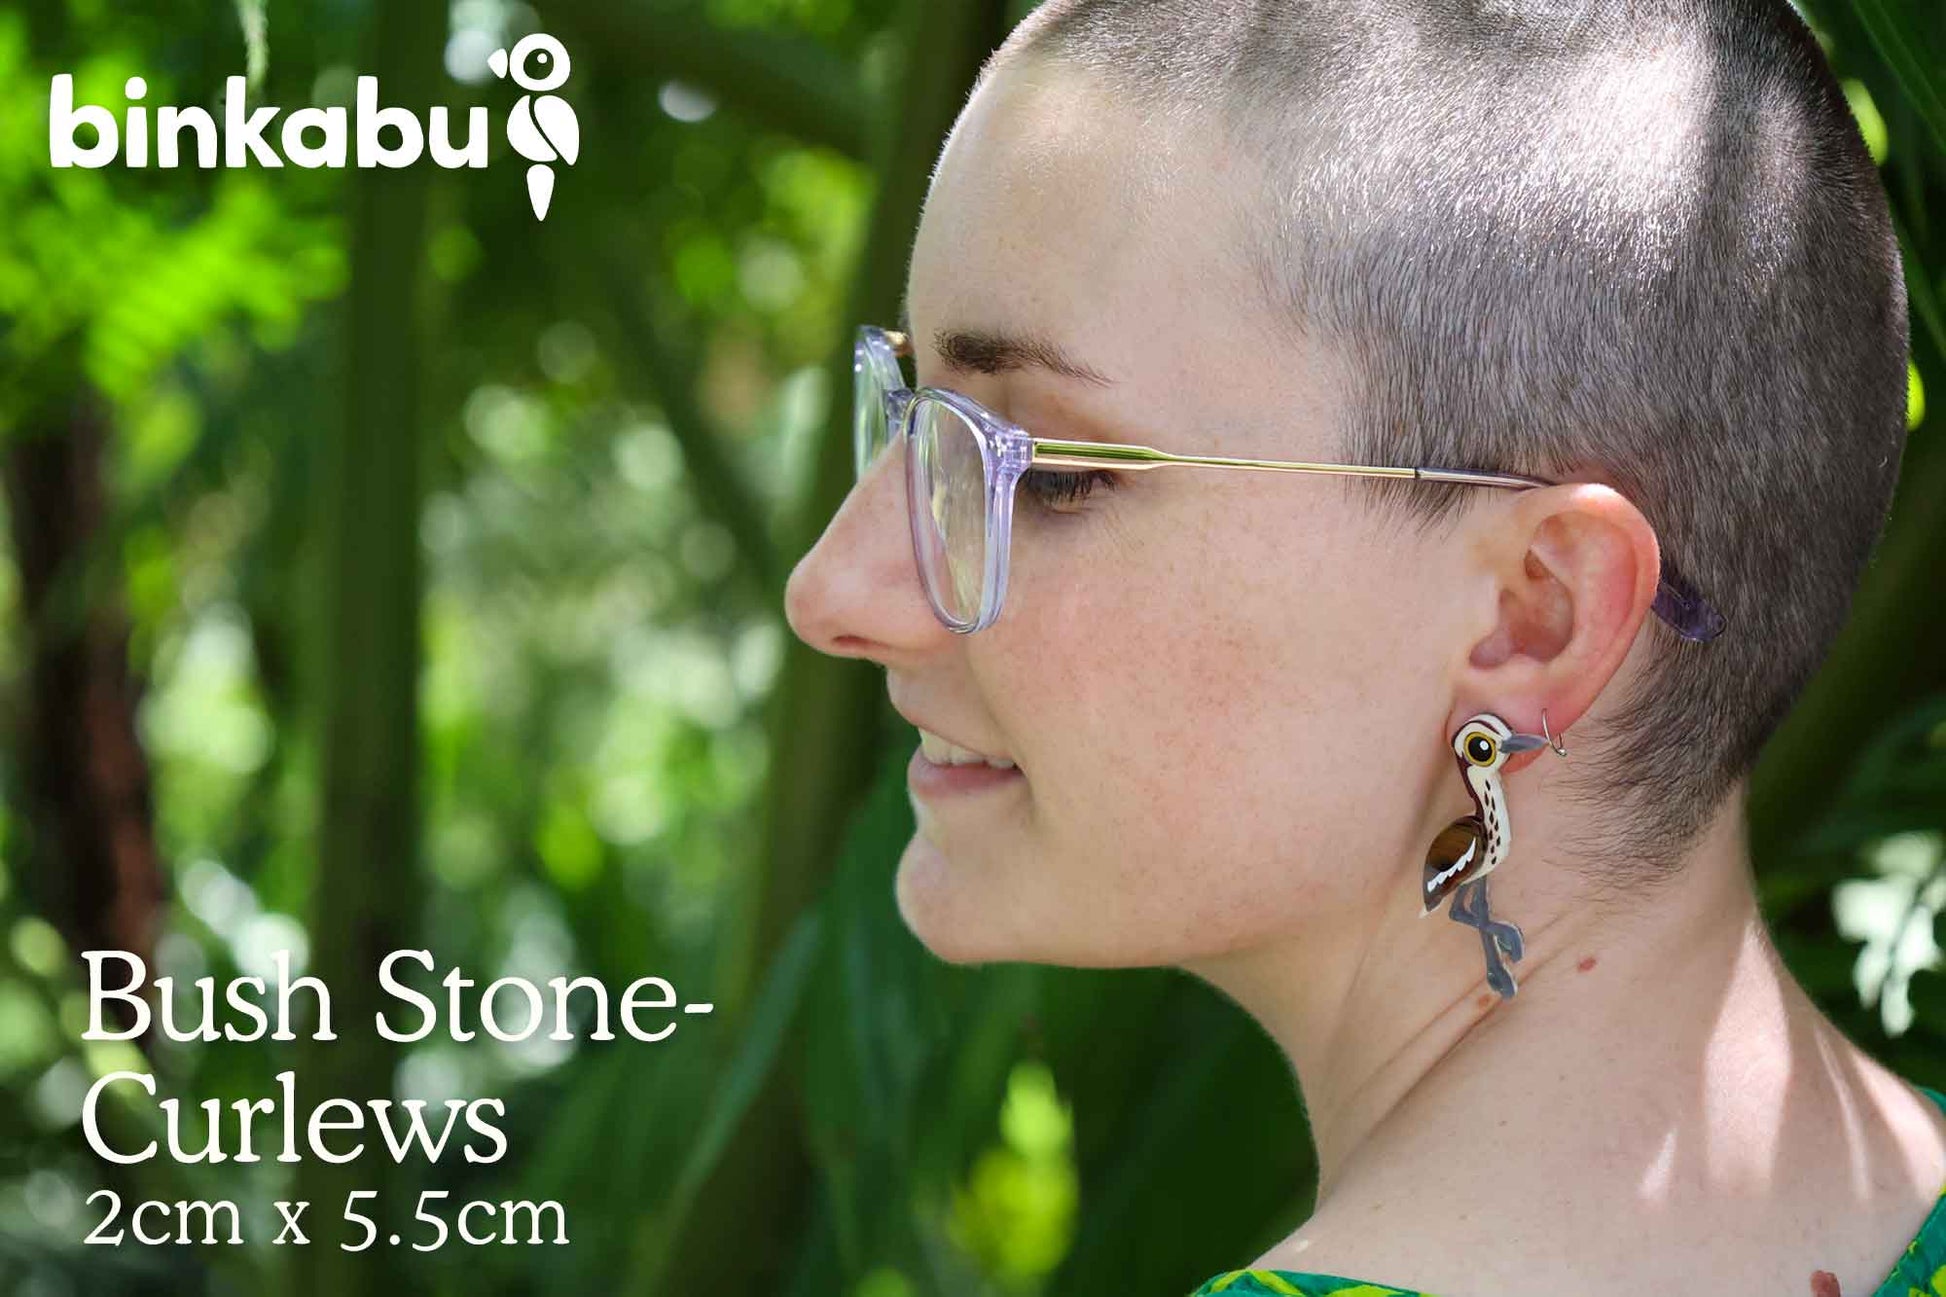 BINKABU bush stone-curlew earrings